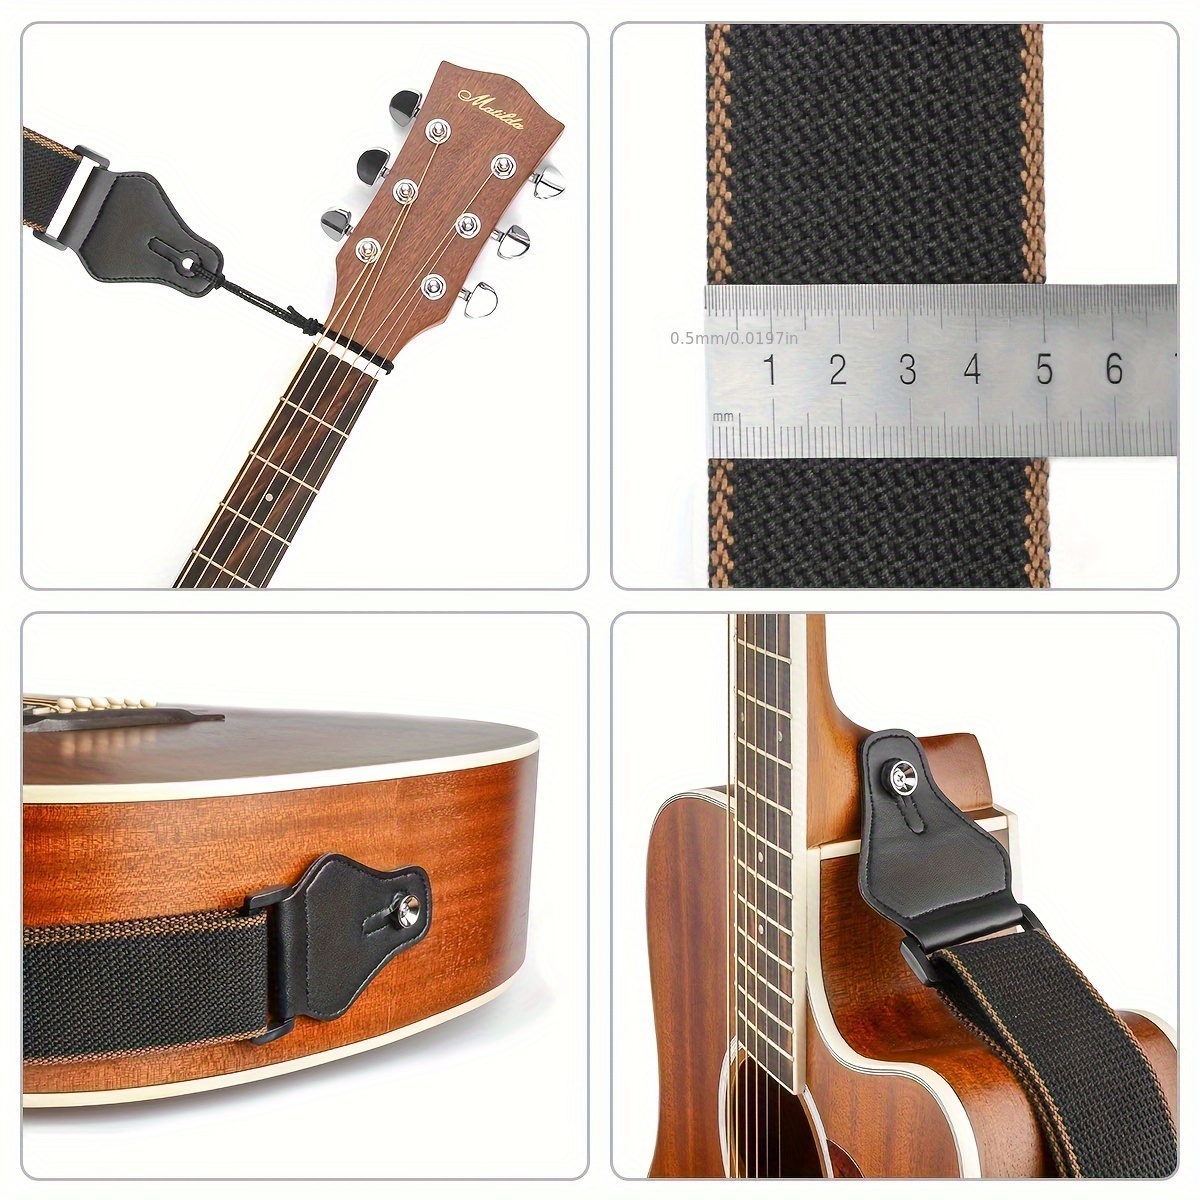  Guitar Strap For Acoustic Guitar , Electric Guitar and Bass  Guitar, Adjustable Gold Brown Guitar Strap W/ FREE BONUS 2 Picks + Strap  Locks + Strap Button. Best Gift For Men